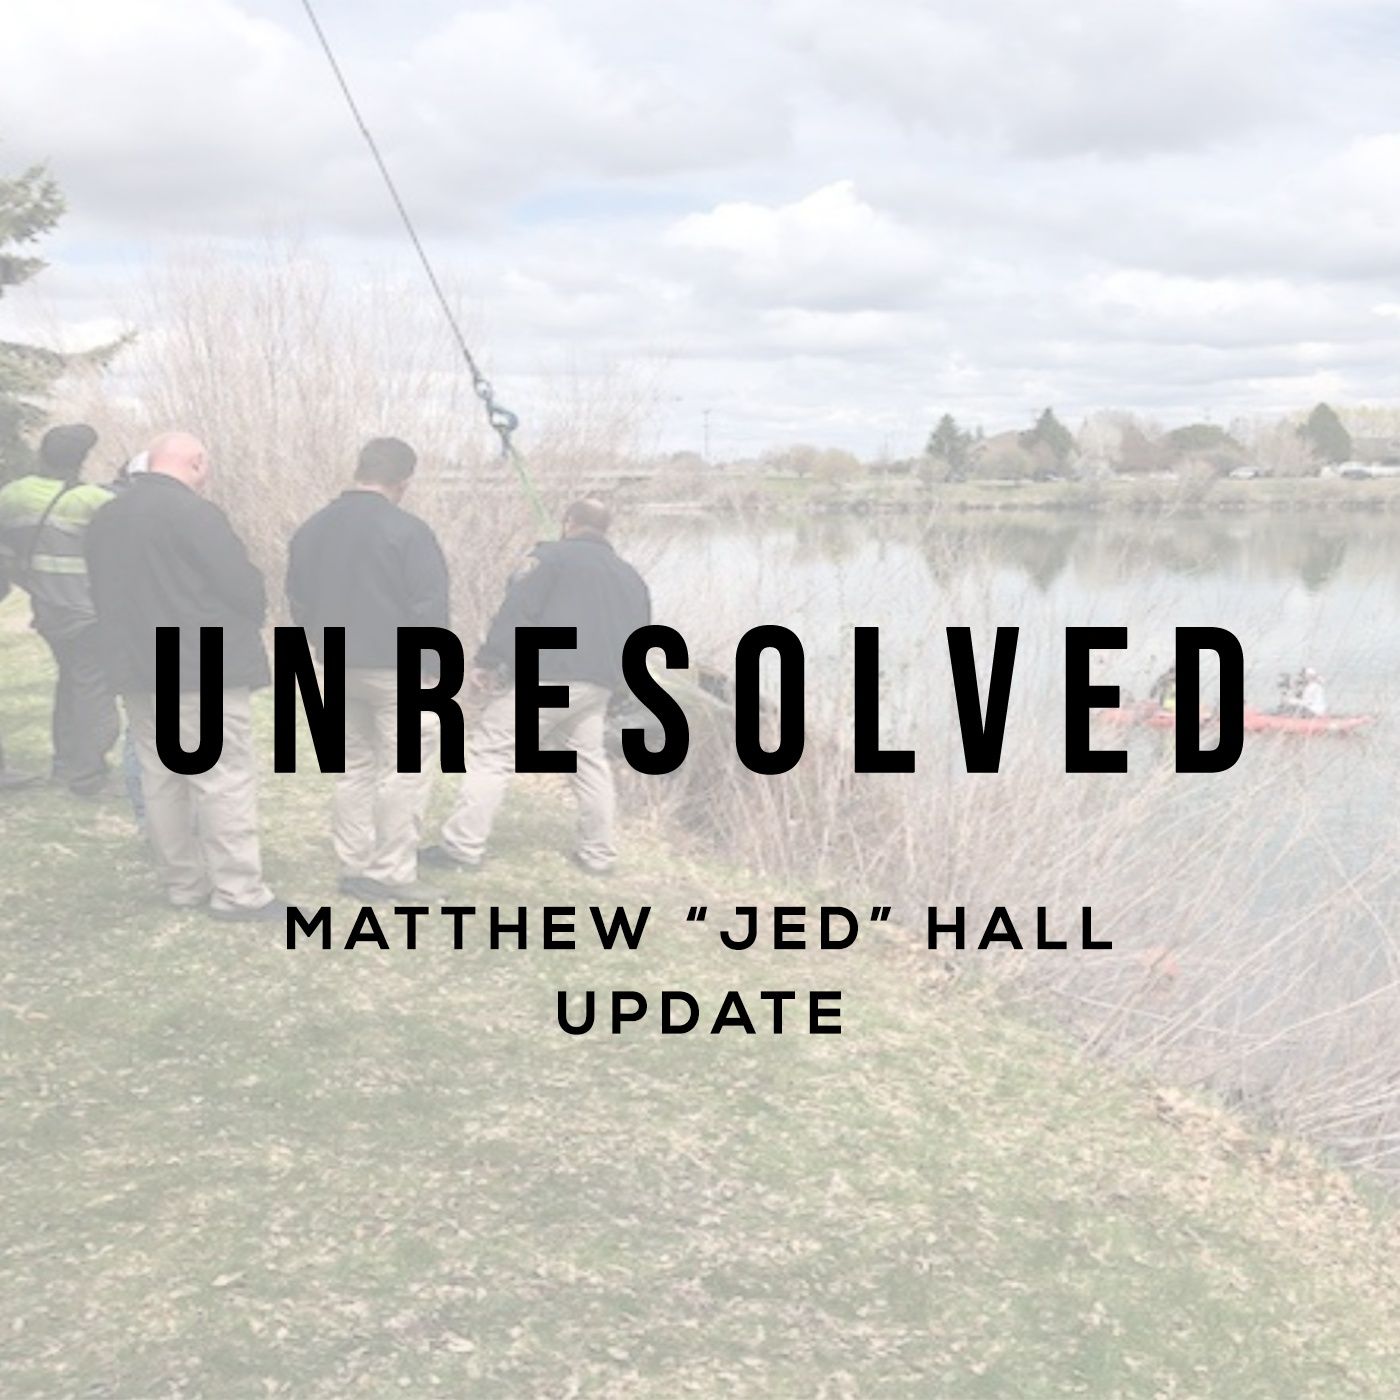 Matthew ”Jed” Hall (Update)